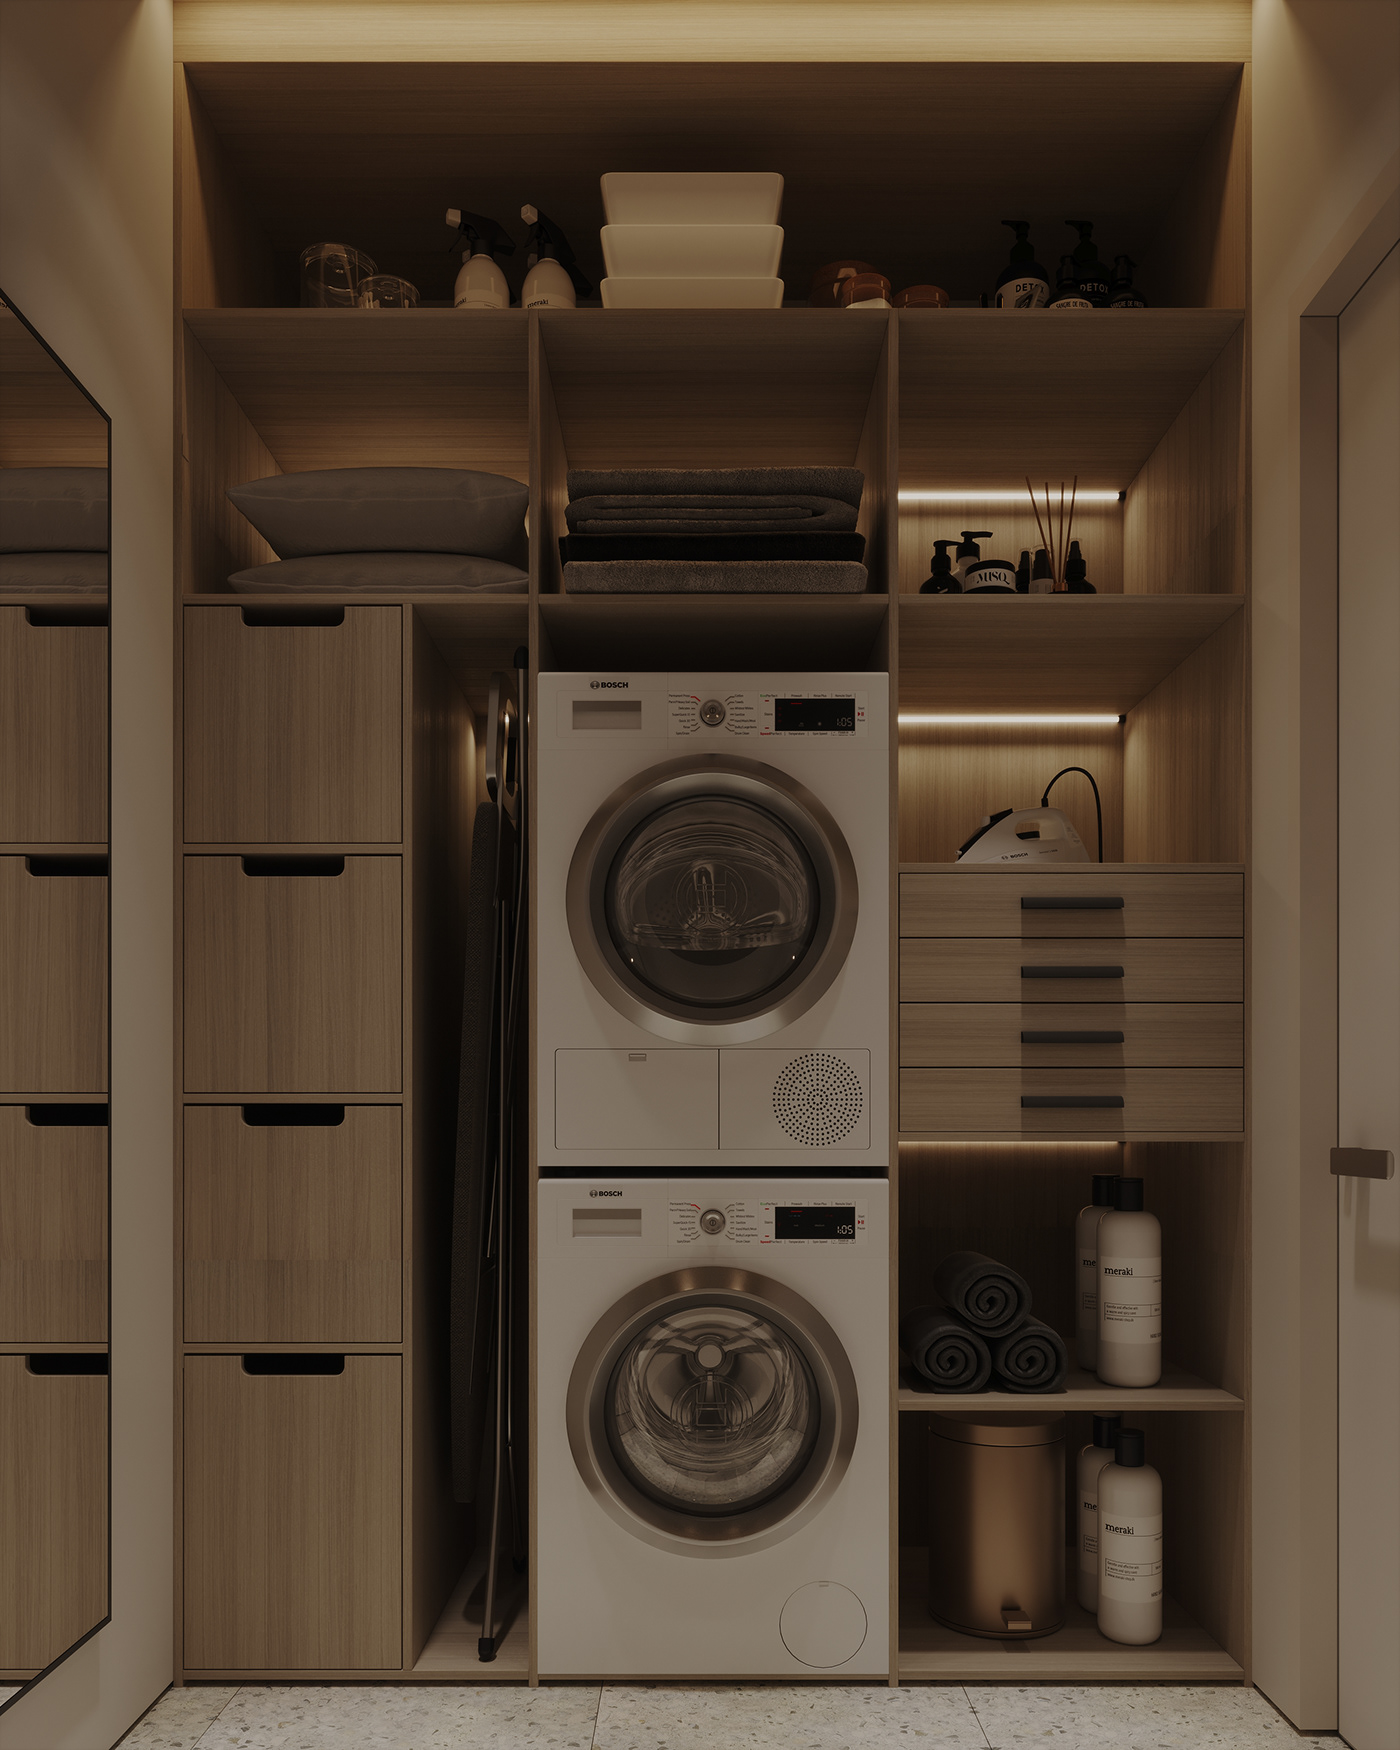 visualization archviz Render 3ds max architecture corona CGI minimalist interiordesign home